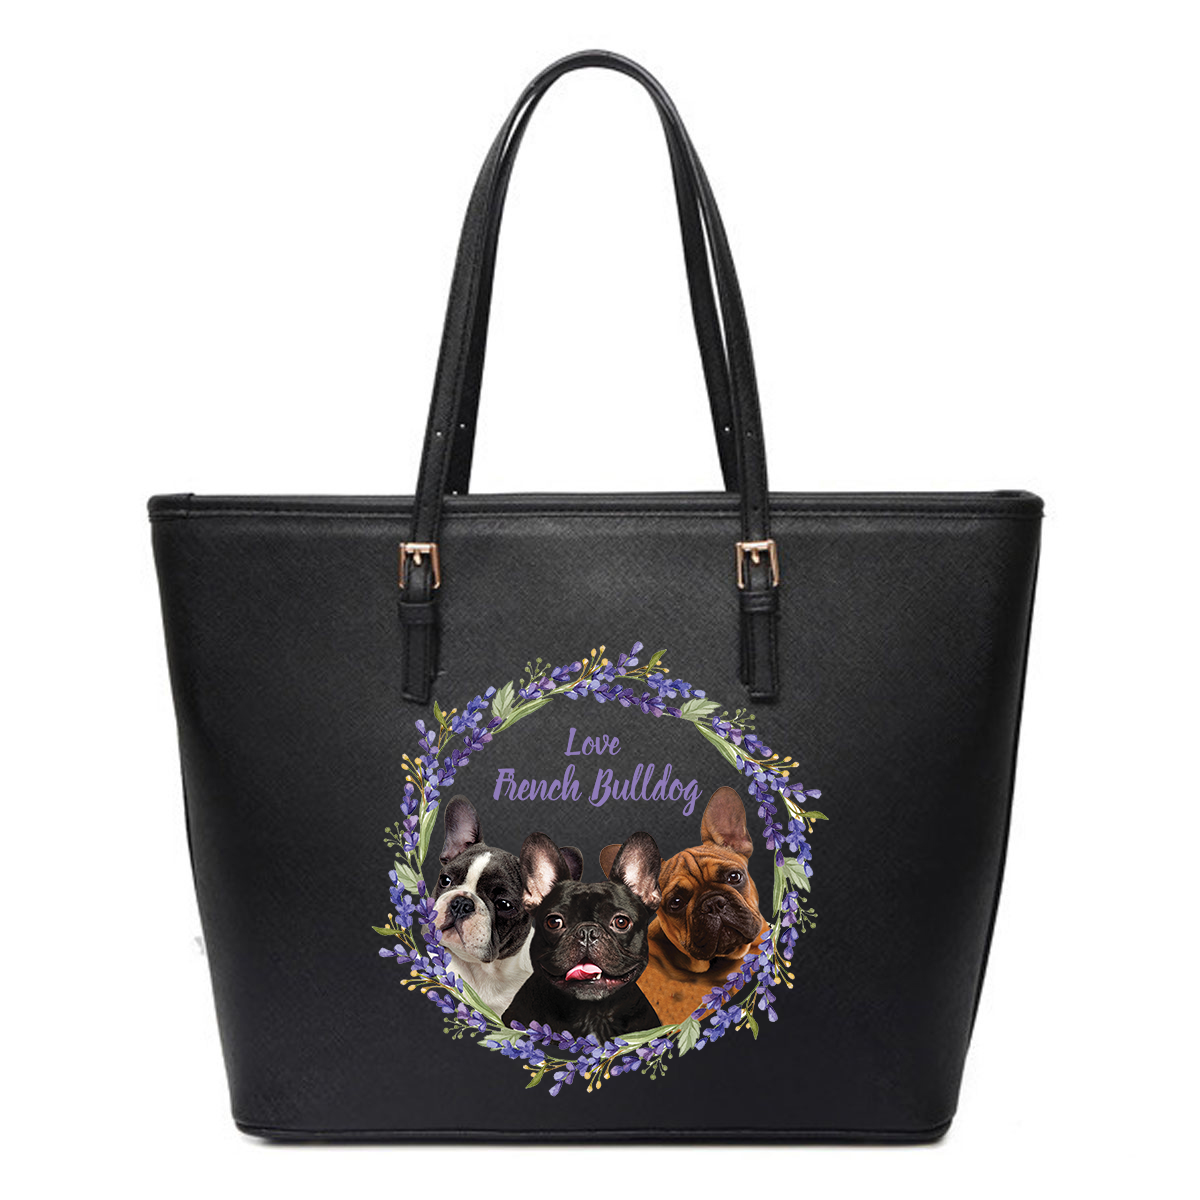 Beautiful Wreath - French Bulldog Tote Bag V1